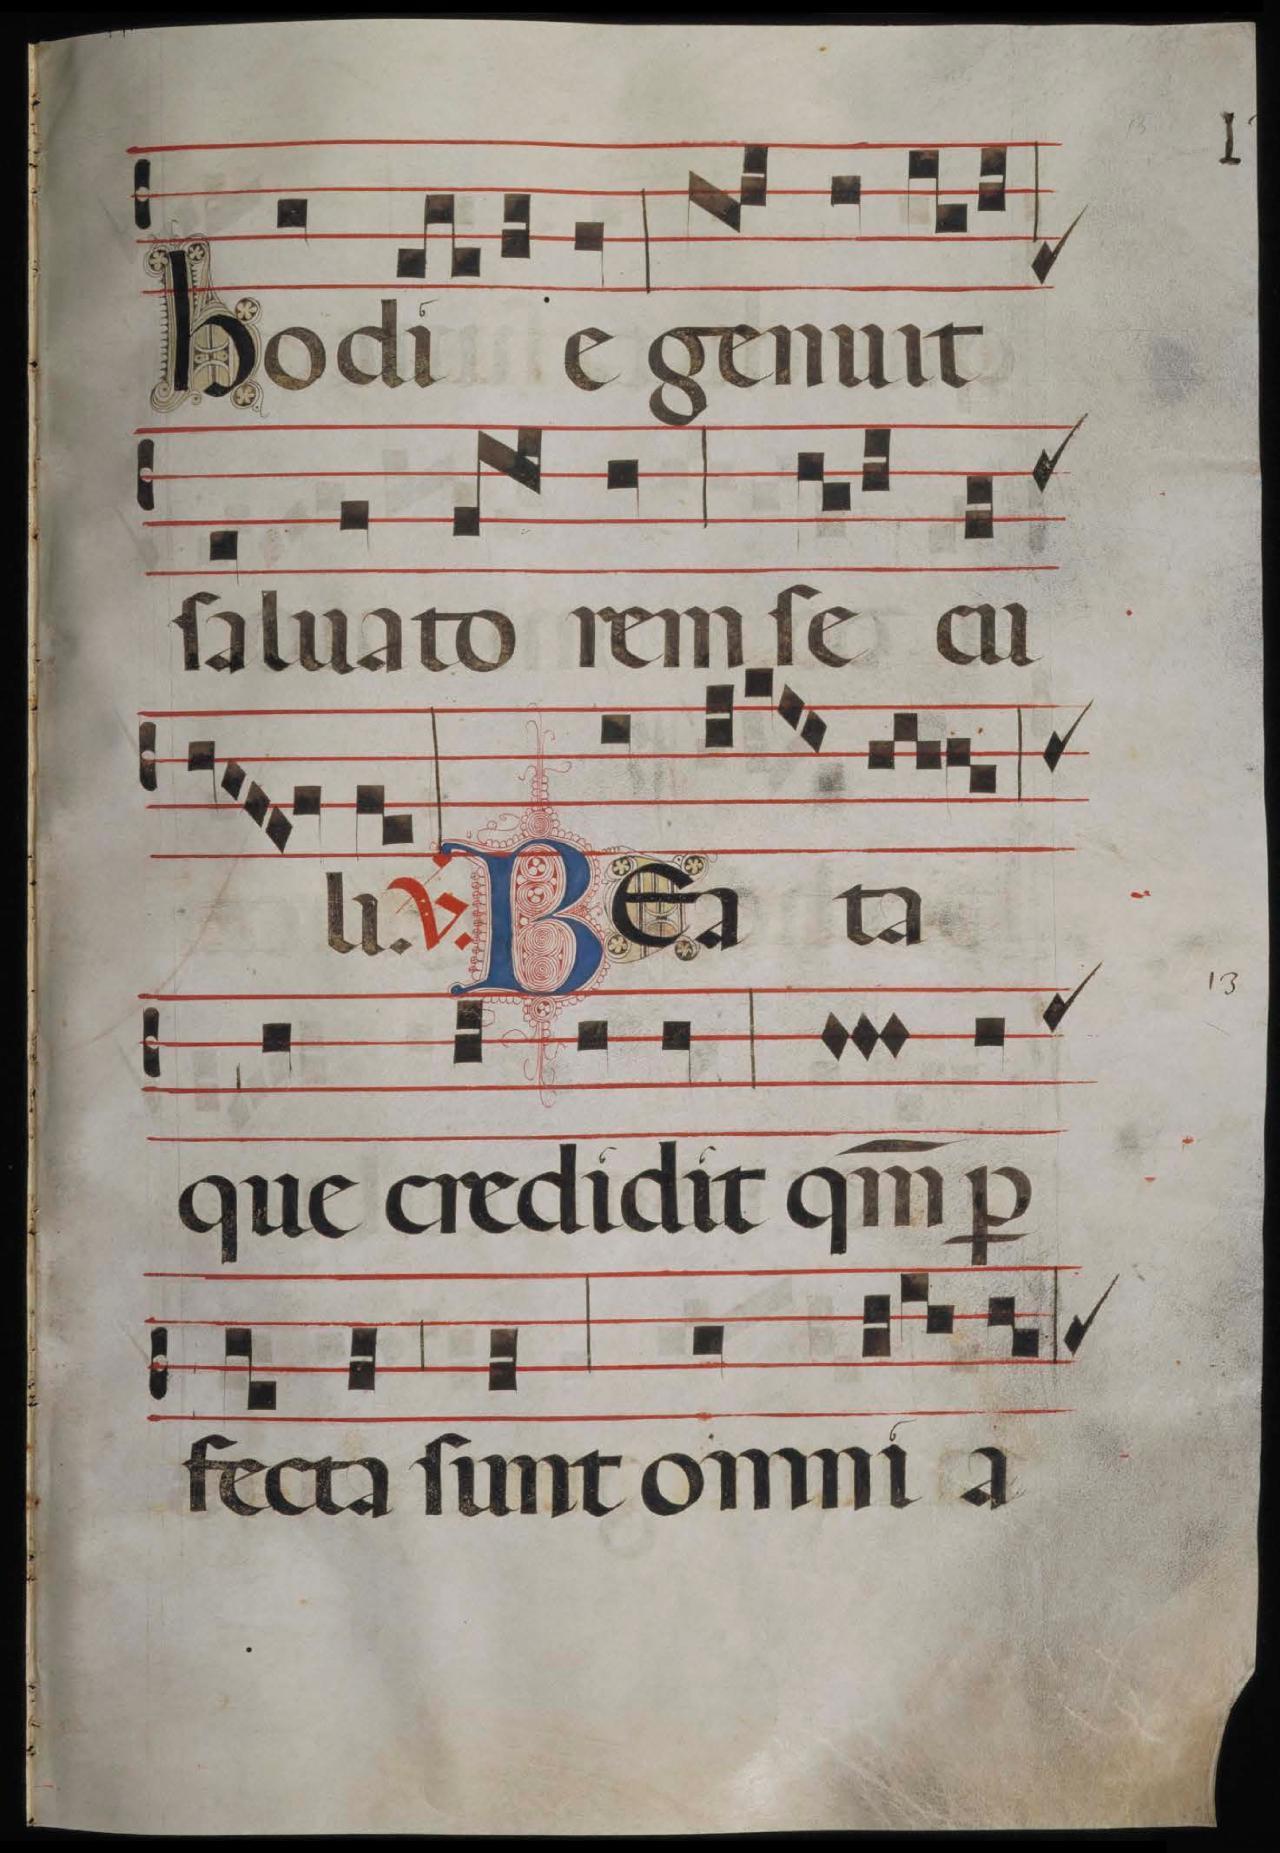 Page 25 of the Antiphonal illuminated manuscript